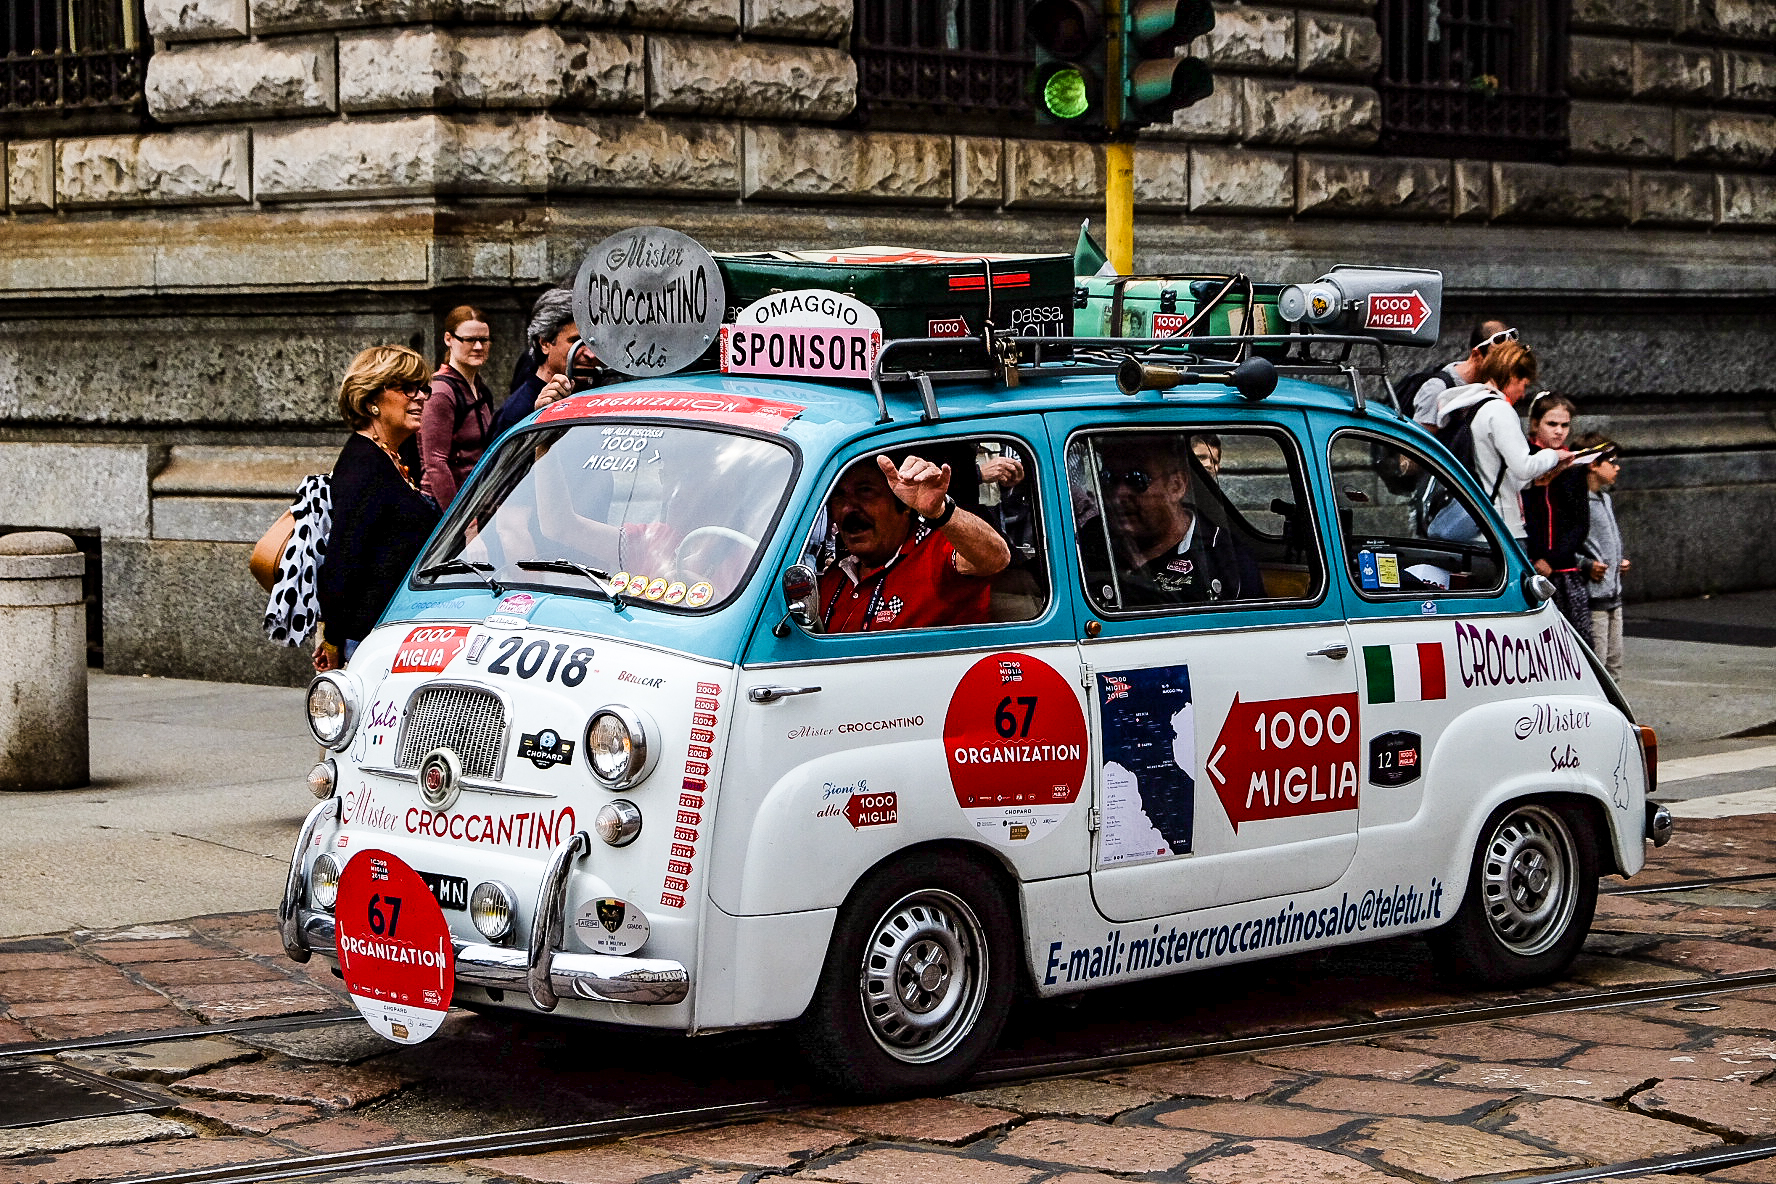 1000 miles in Milan.. Beloved multiple Fiat...